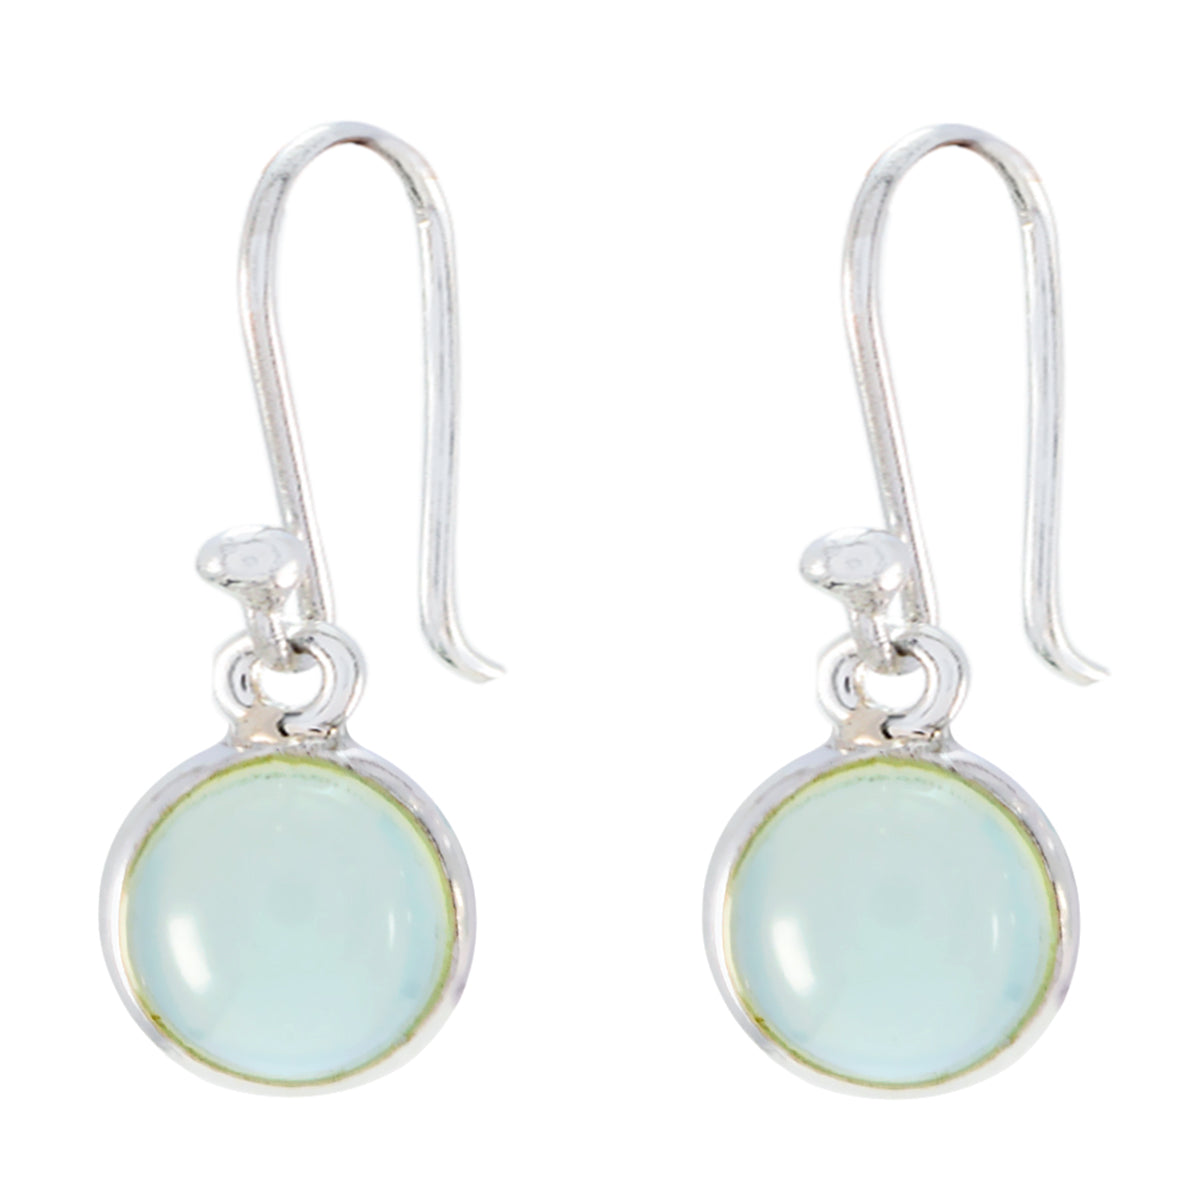 Riyo Good Gemstones round Cabochon Blue Chalcedony Silver Earring gift for women